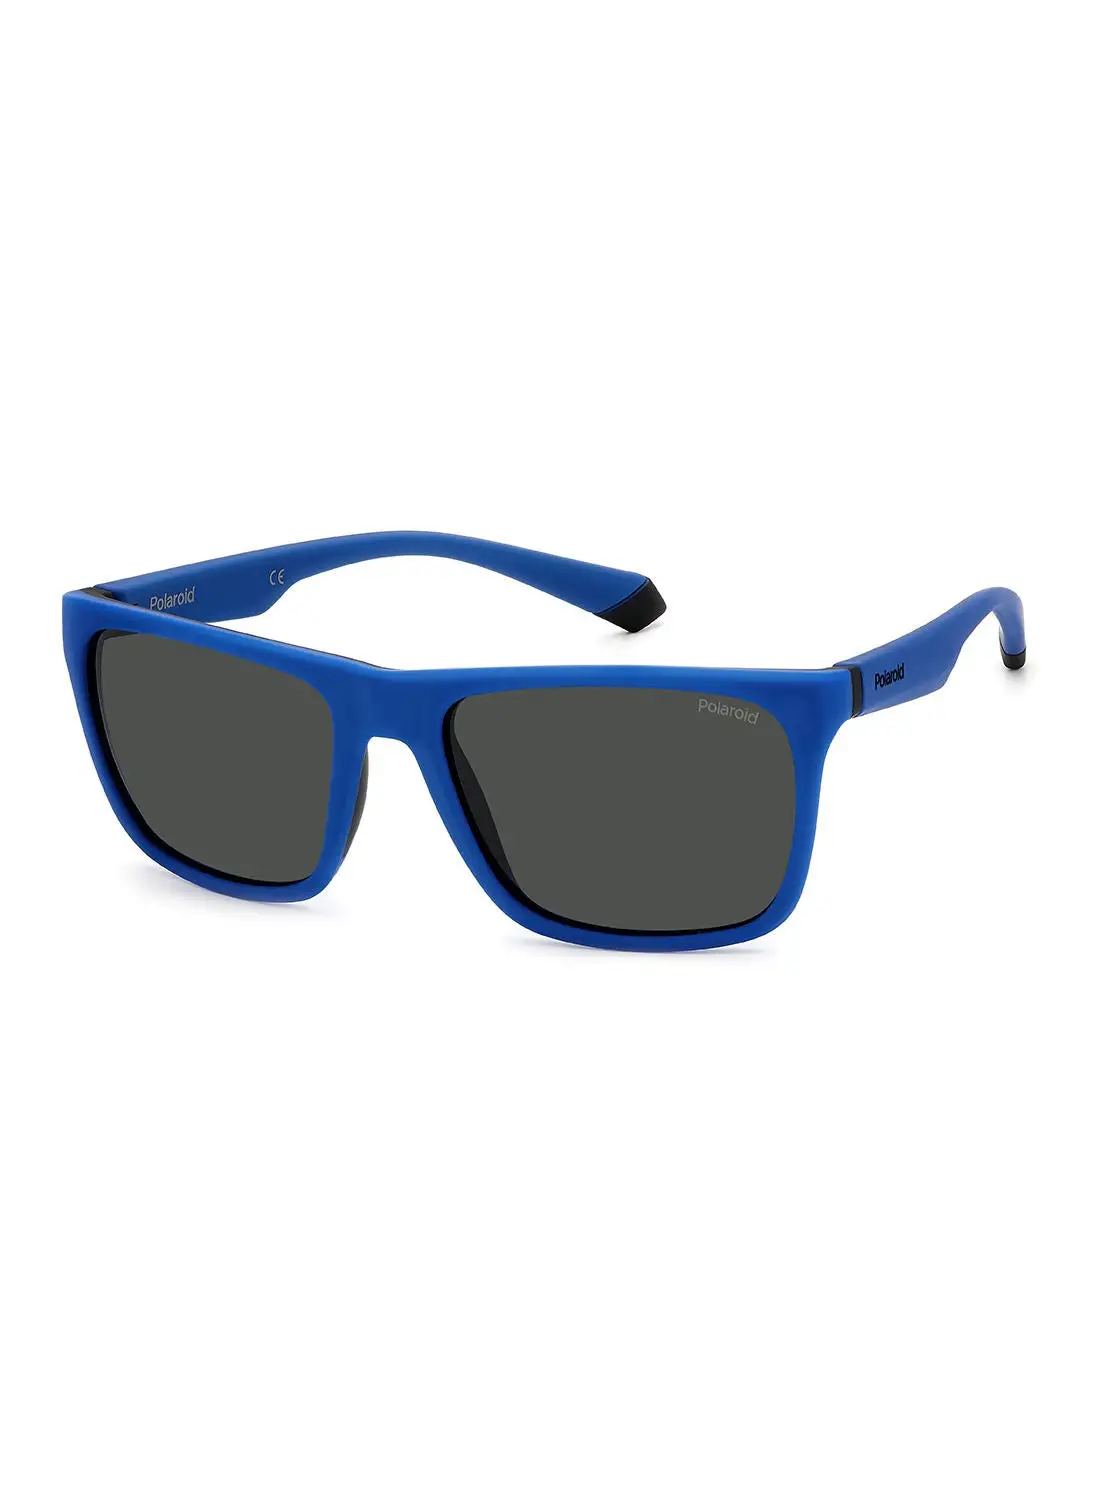 Polaroid Unisex UV Protection Square Sunglasses - Pld 2141/S Mt Bl Blk 57 - Lens Size: 57 Mm